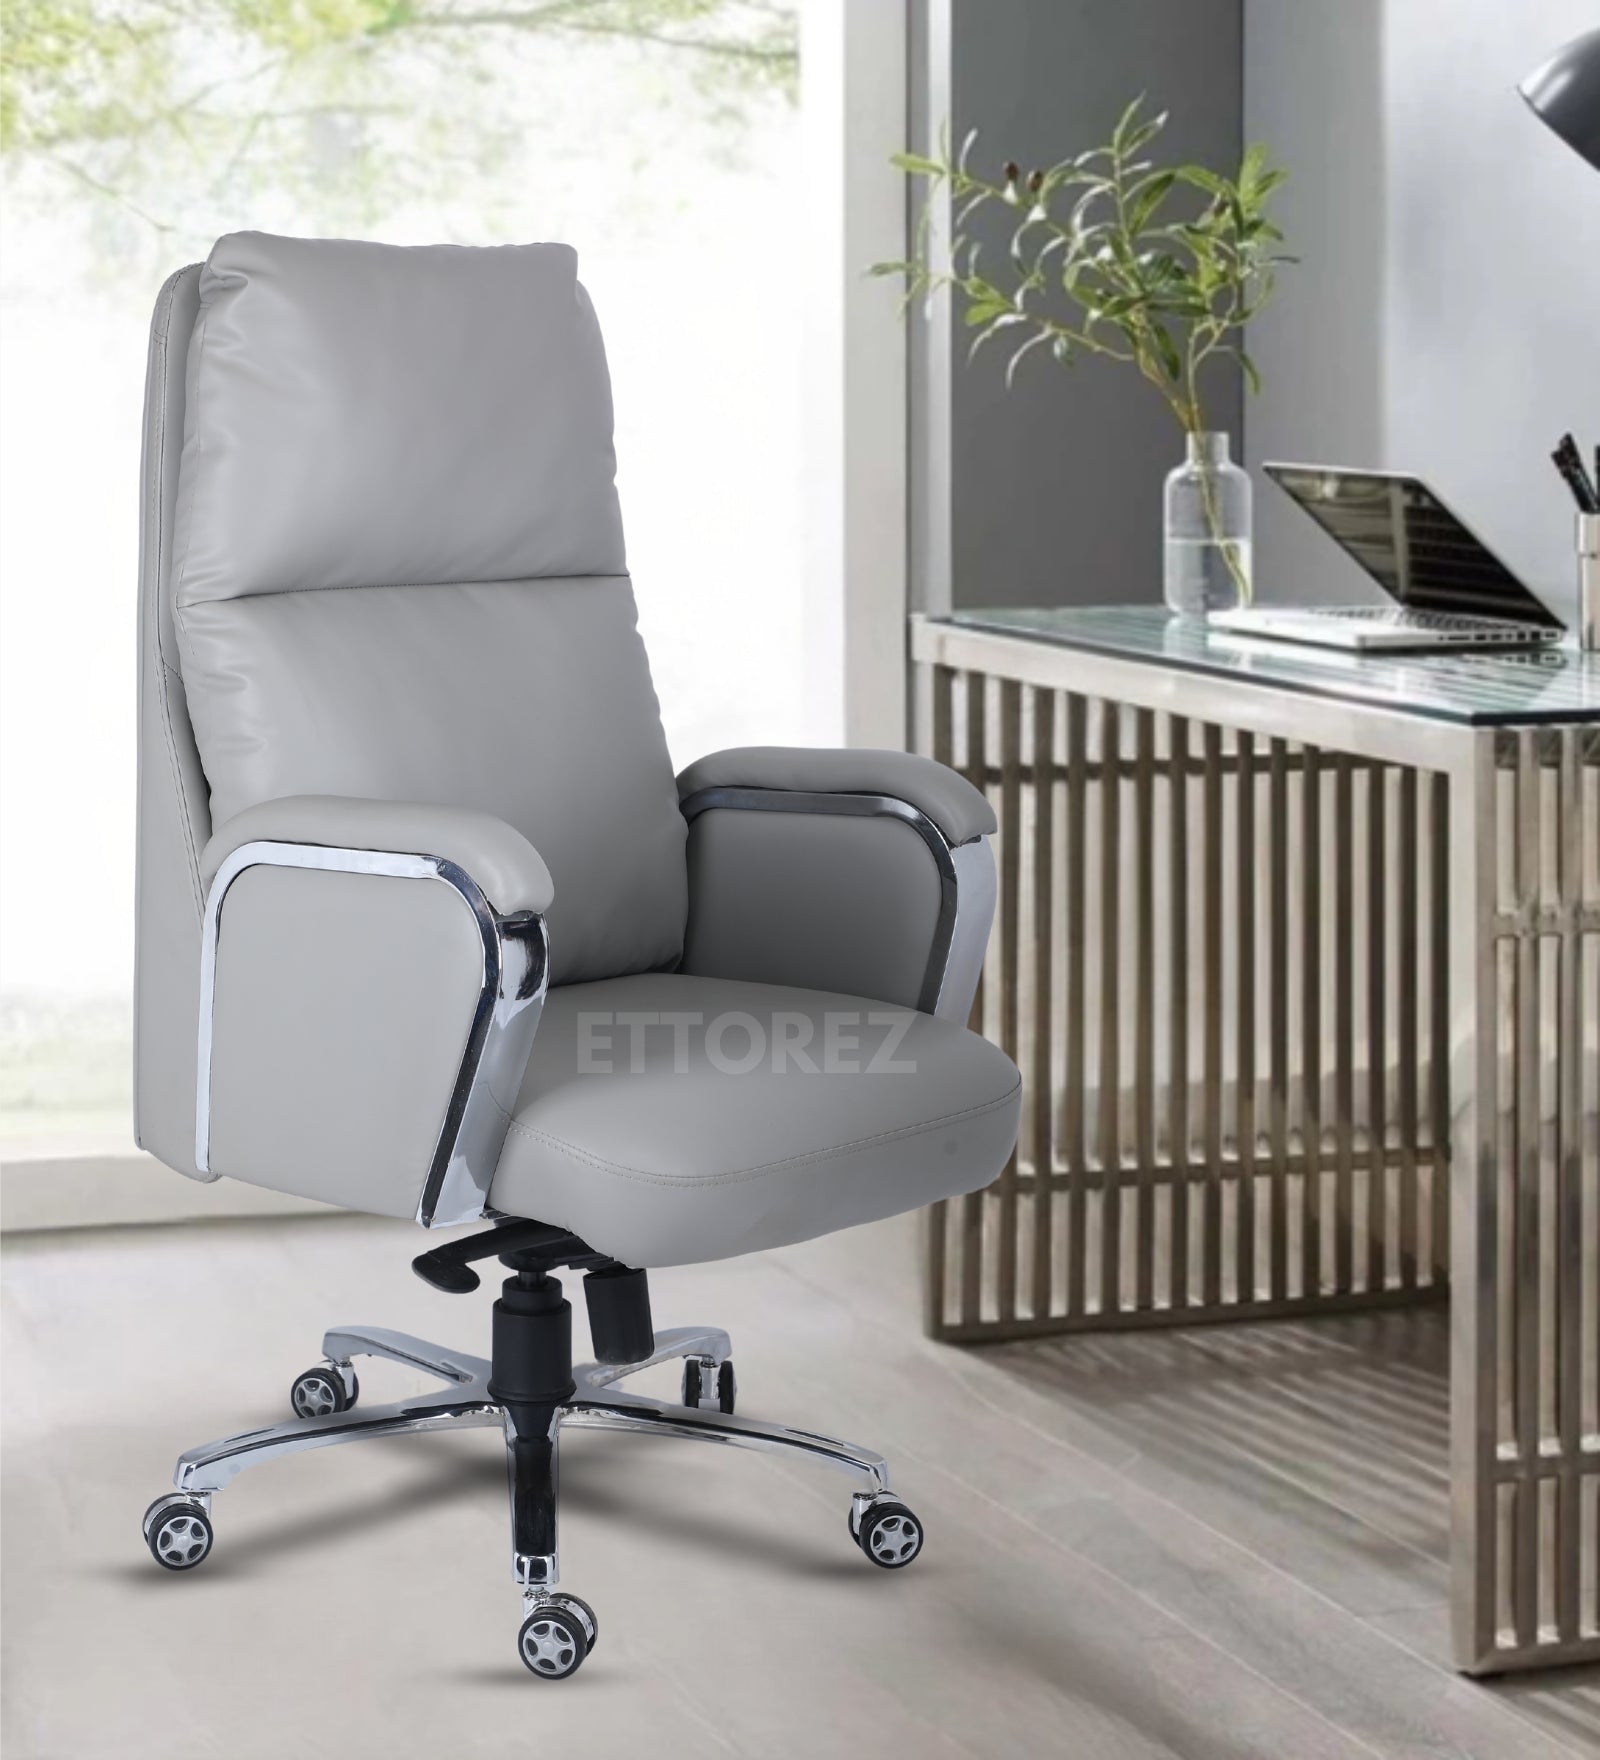 Ettorez POLAR High Back Leatherette Office Chair